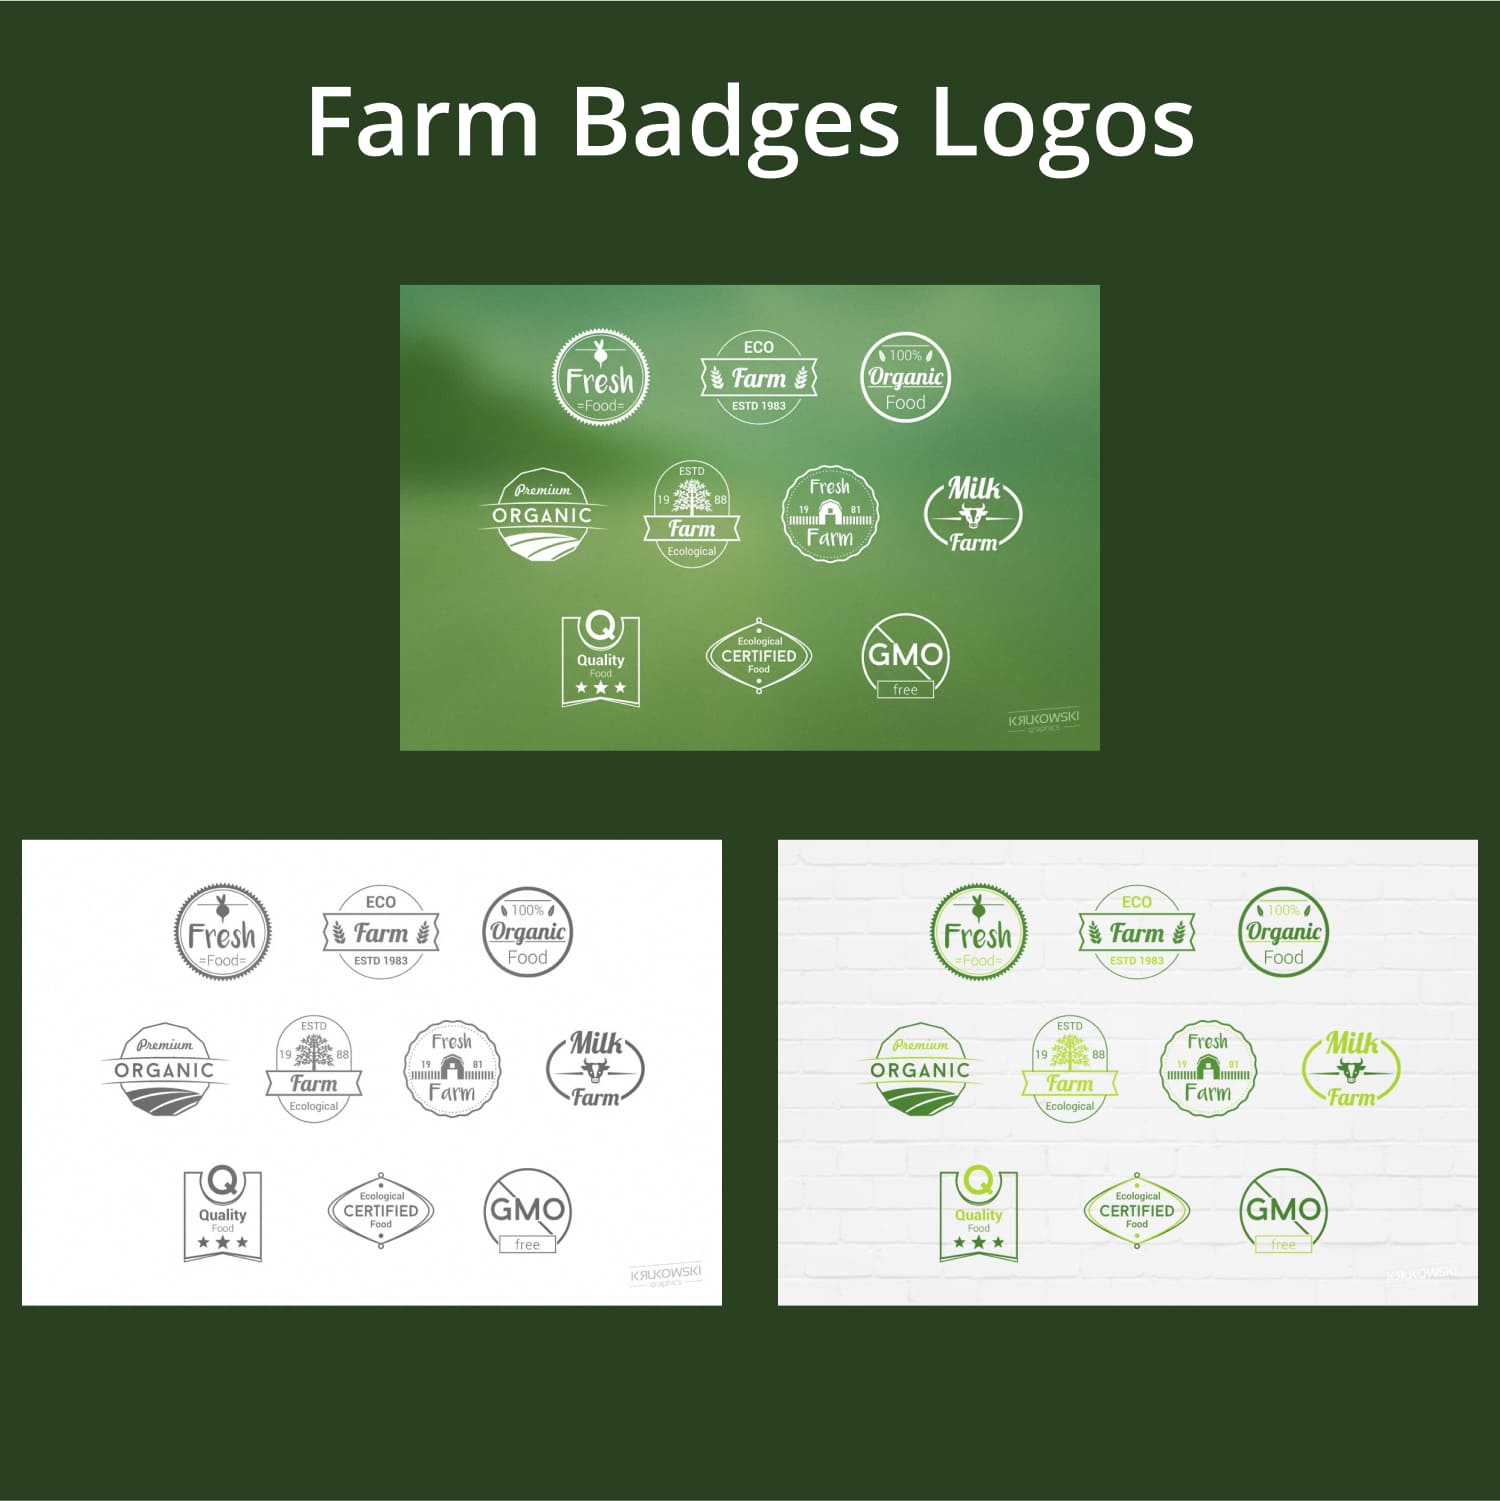 Farm Badges Logos.